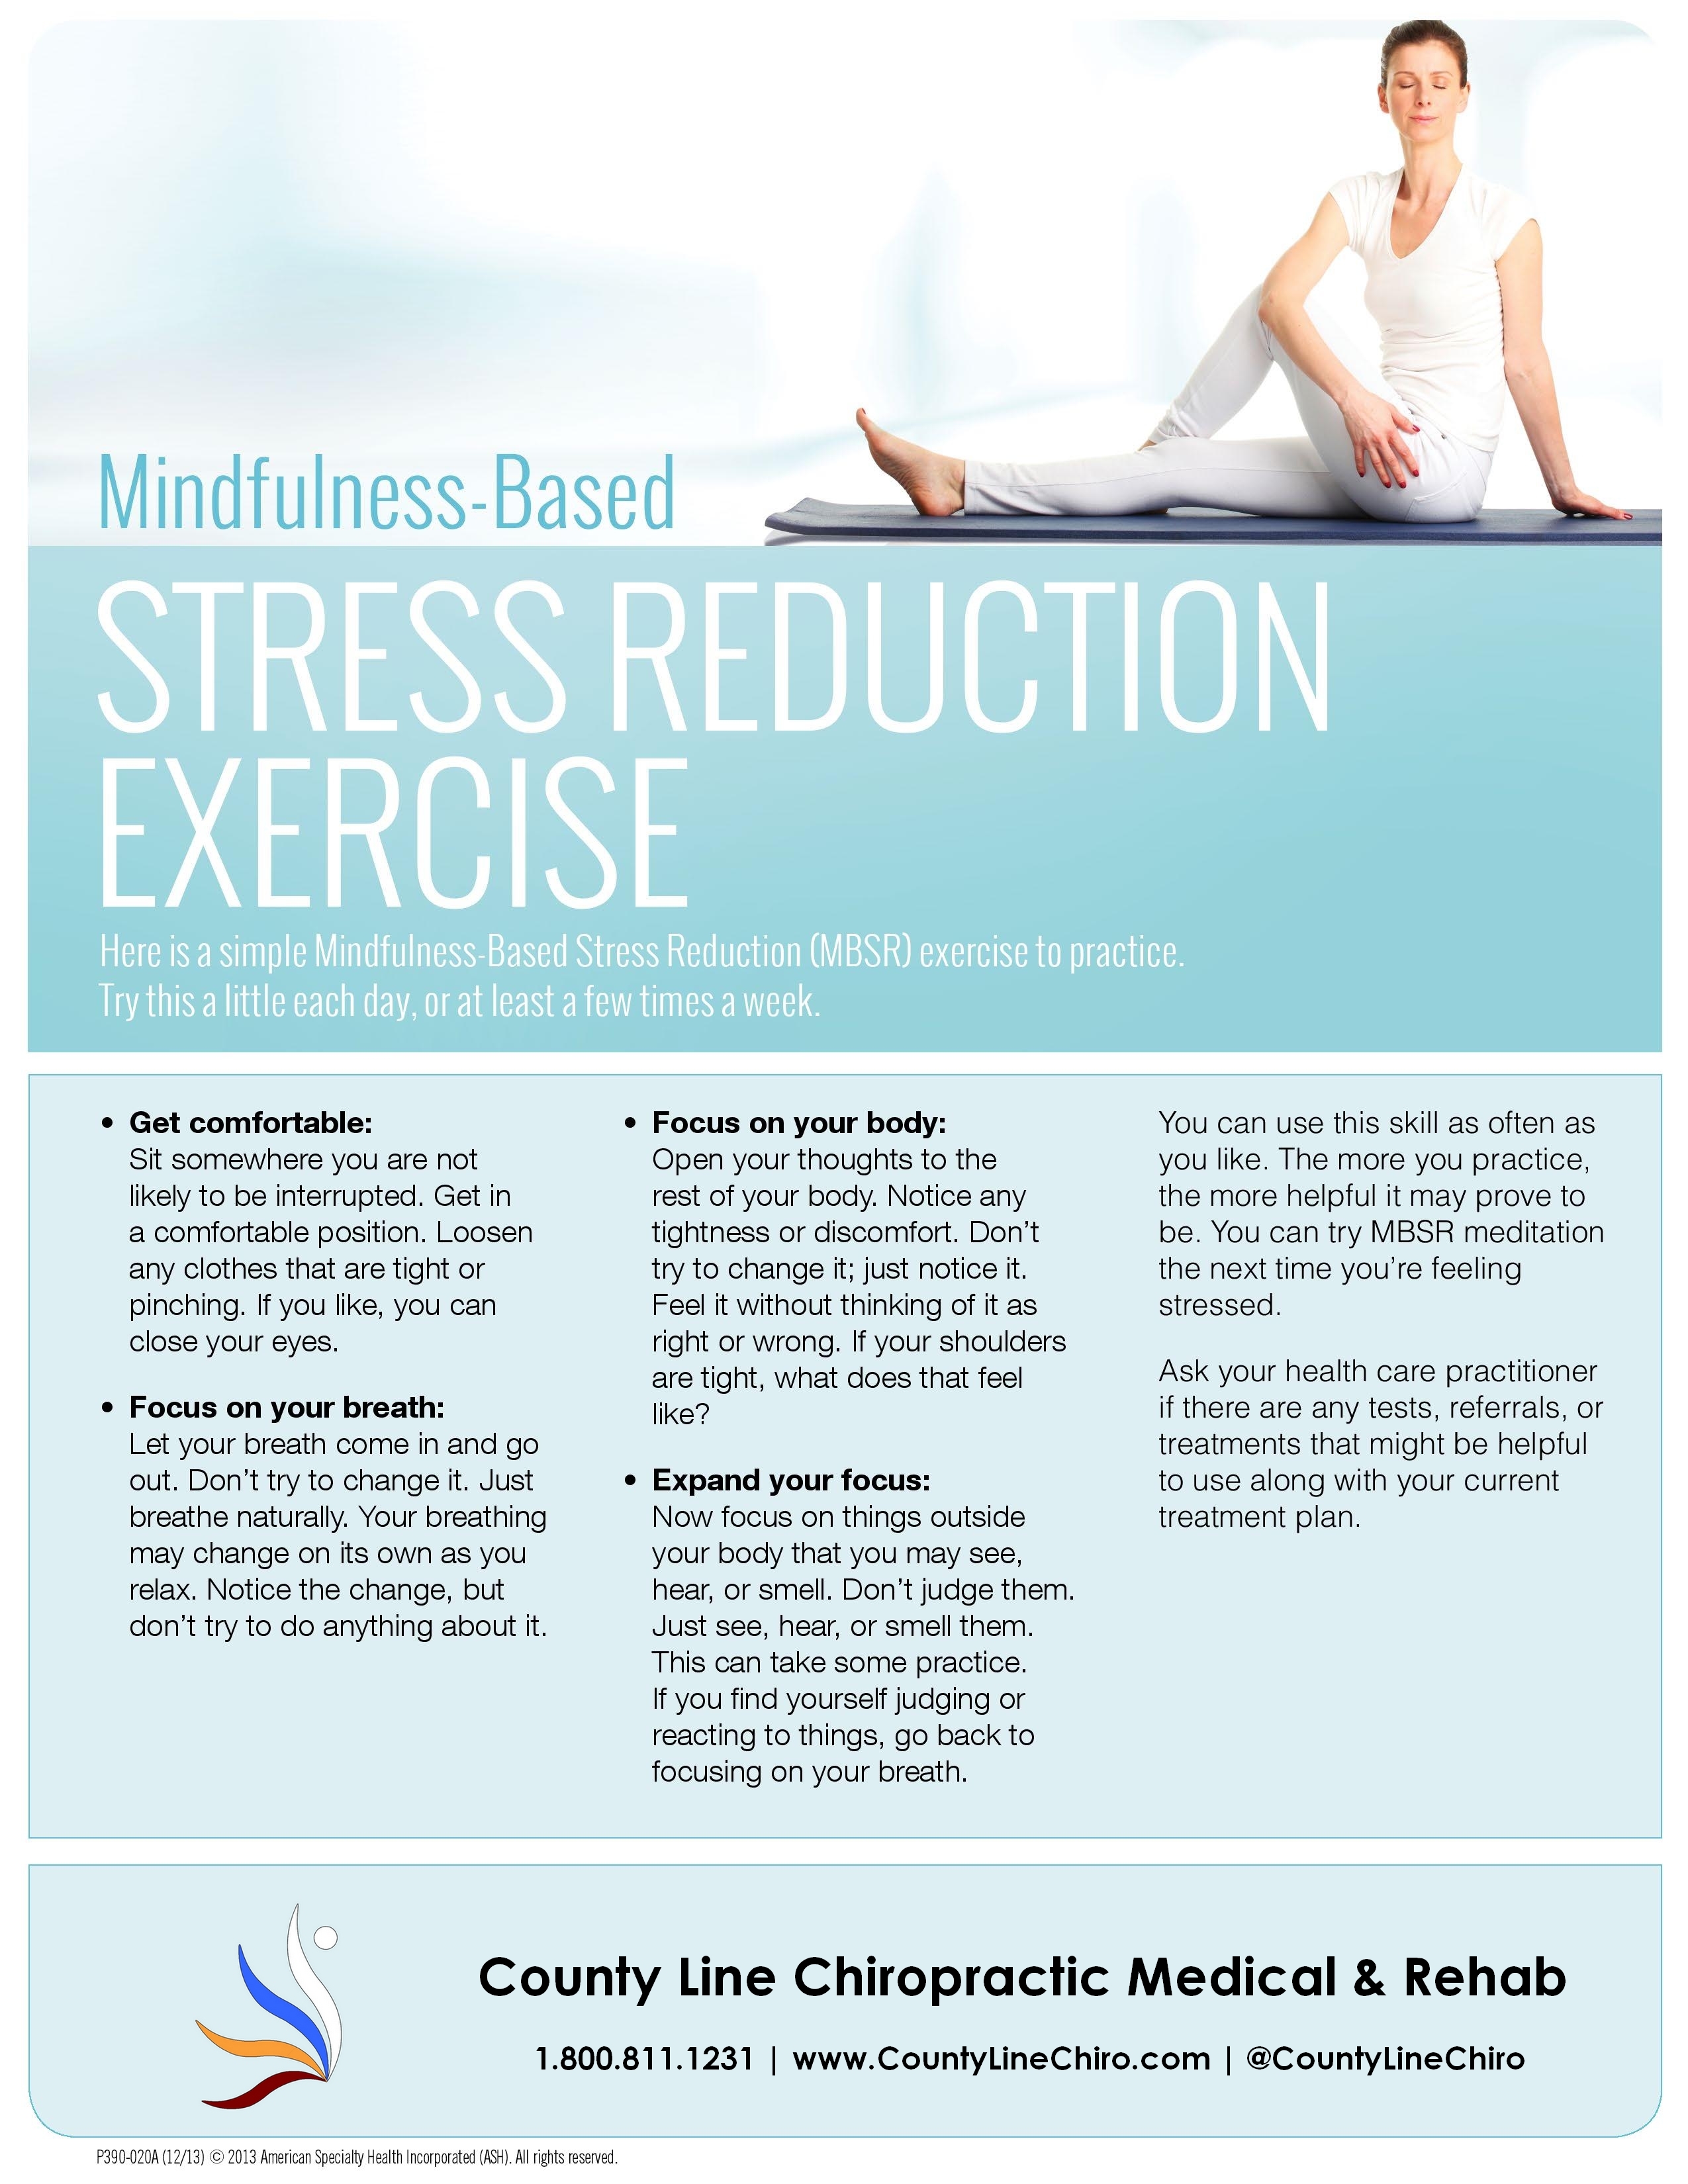 how often stress relief exercises